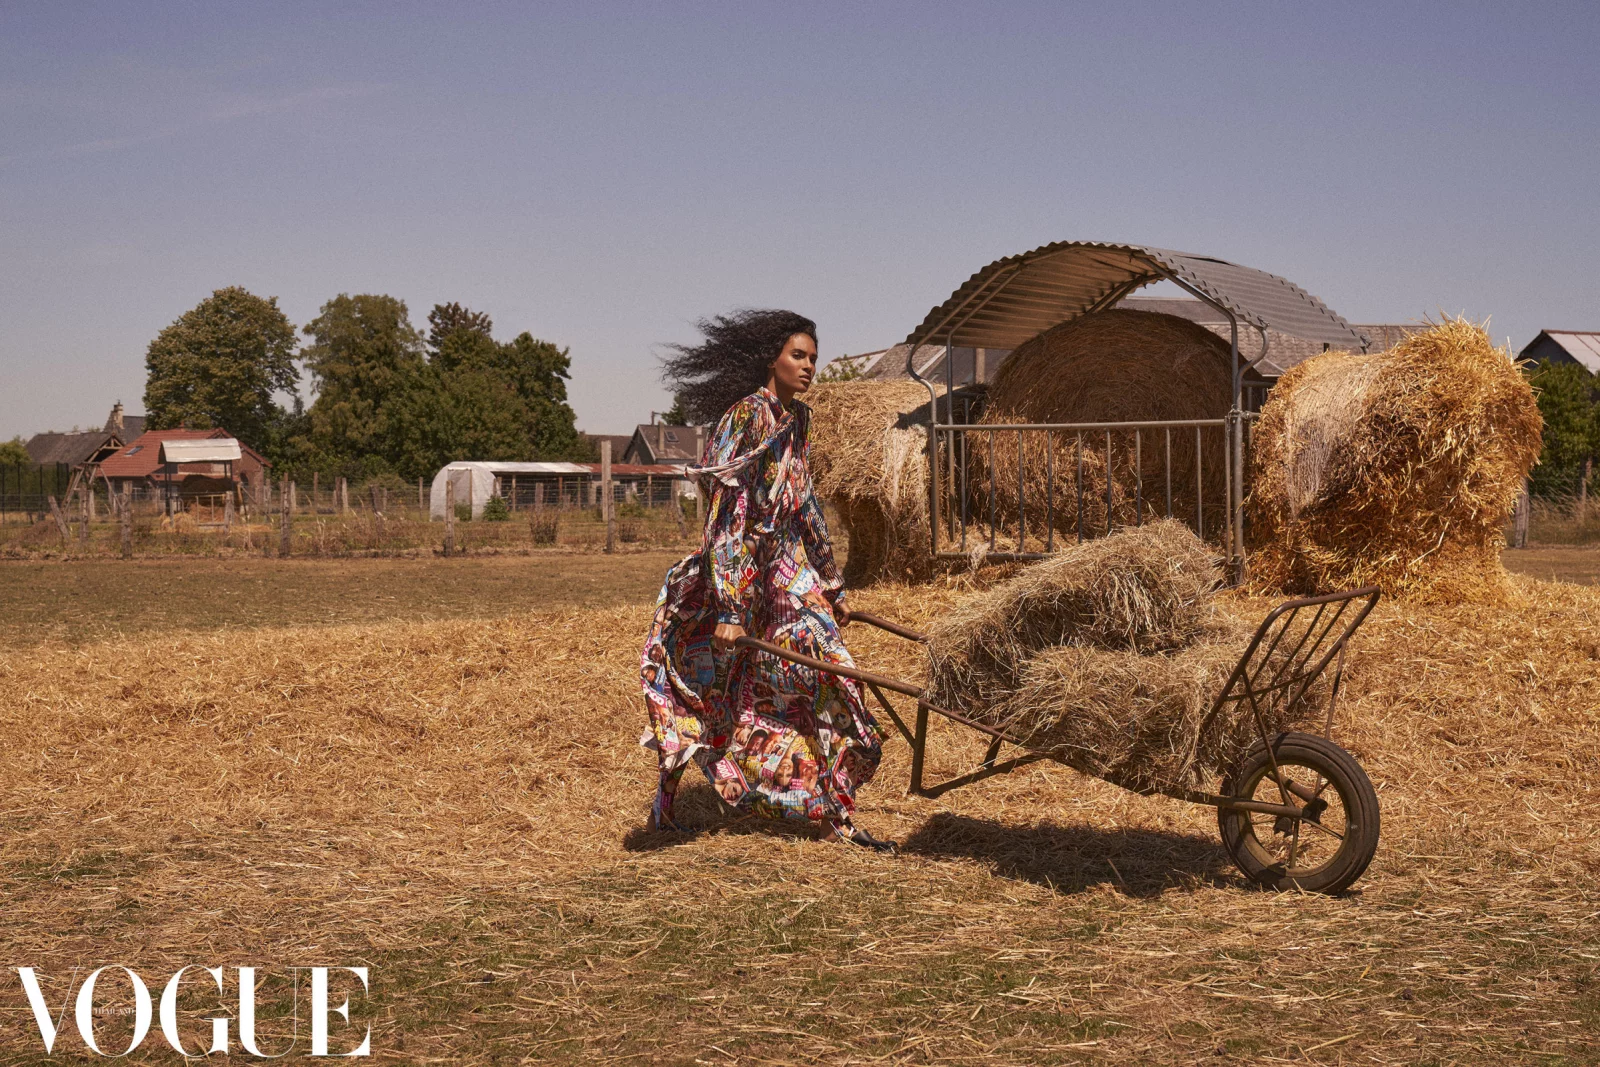 Vogue Thailand 1 by Joseph DEGBADJO